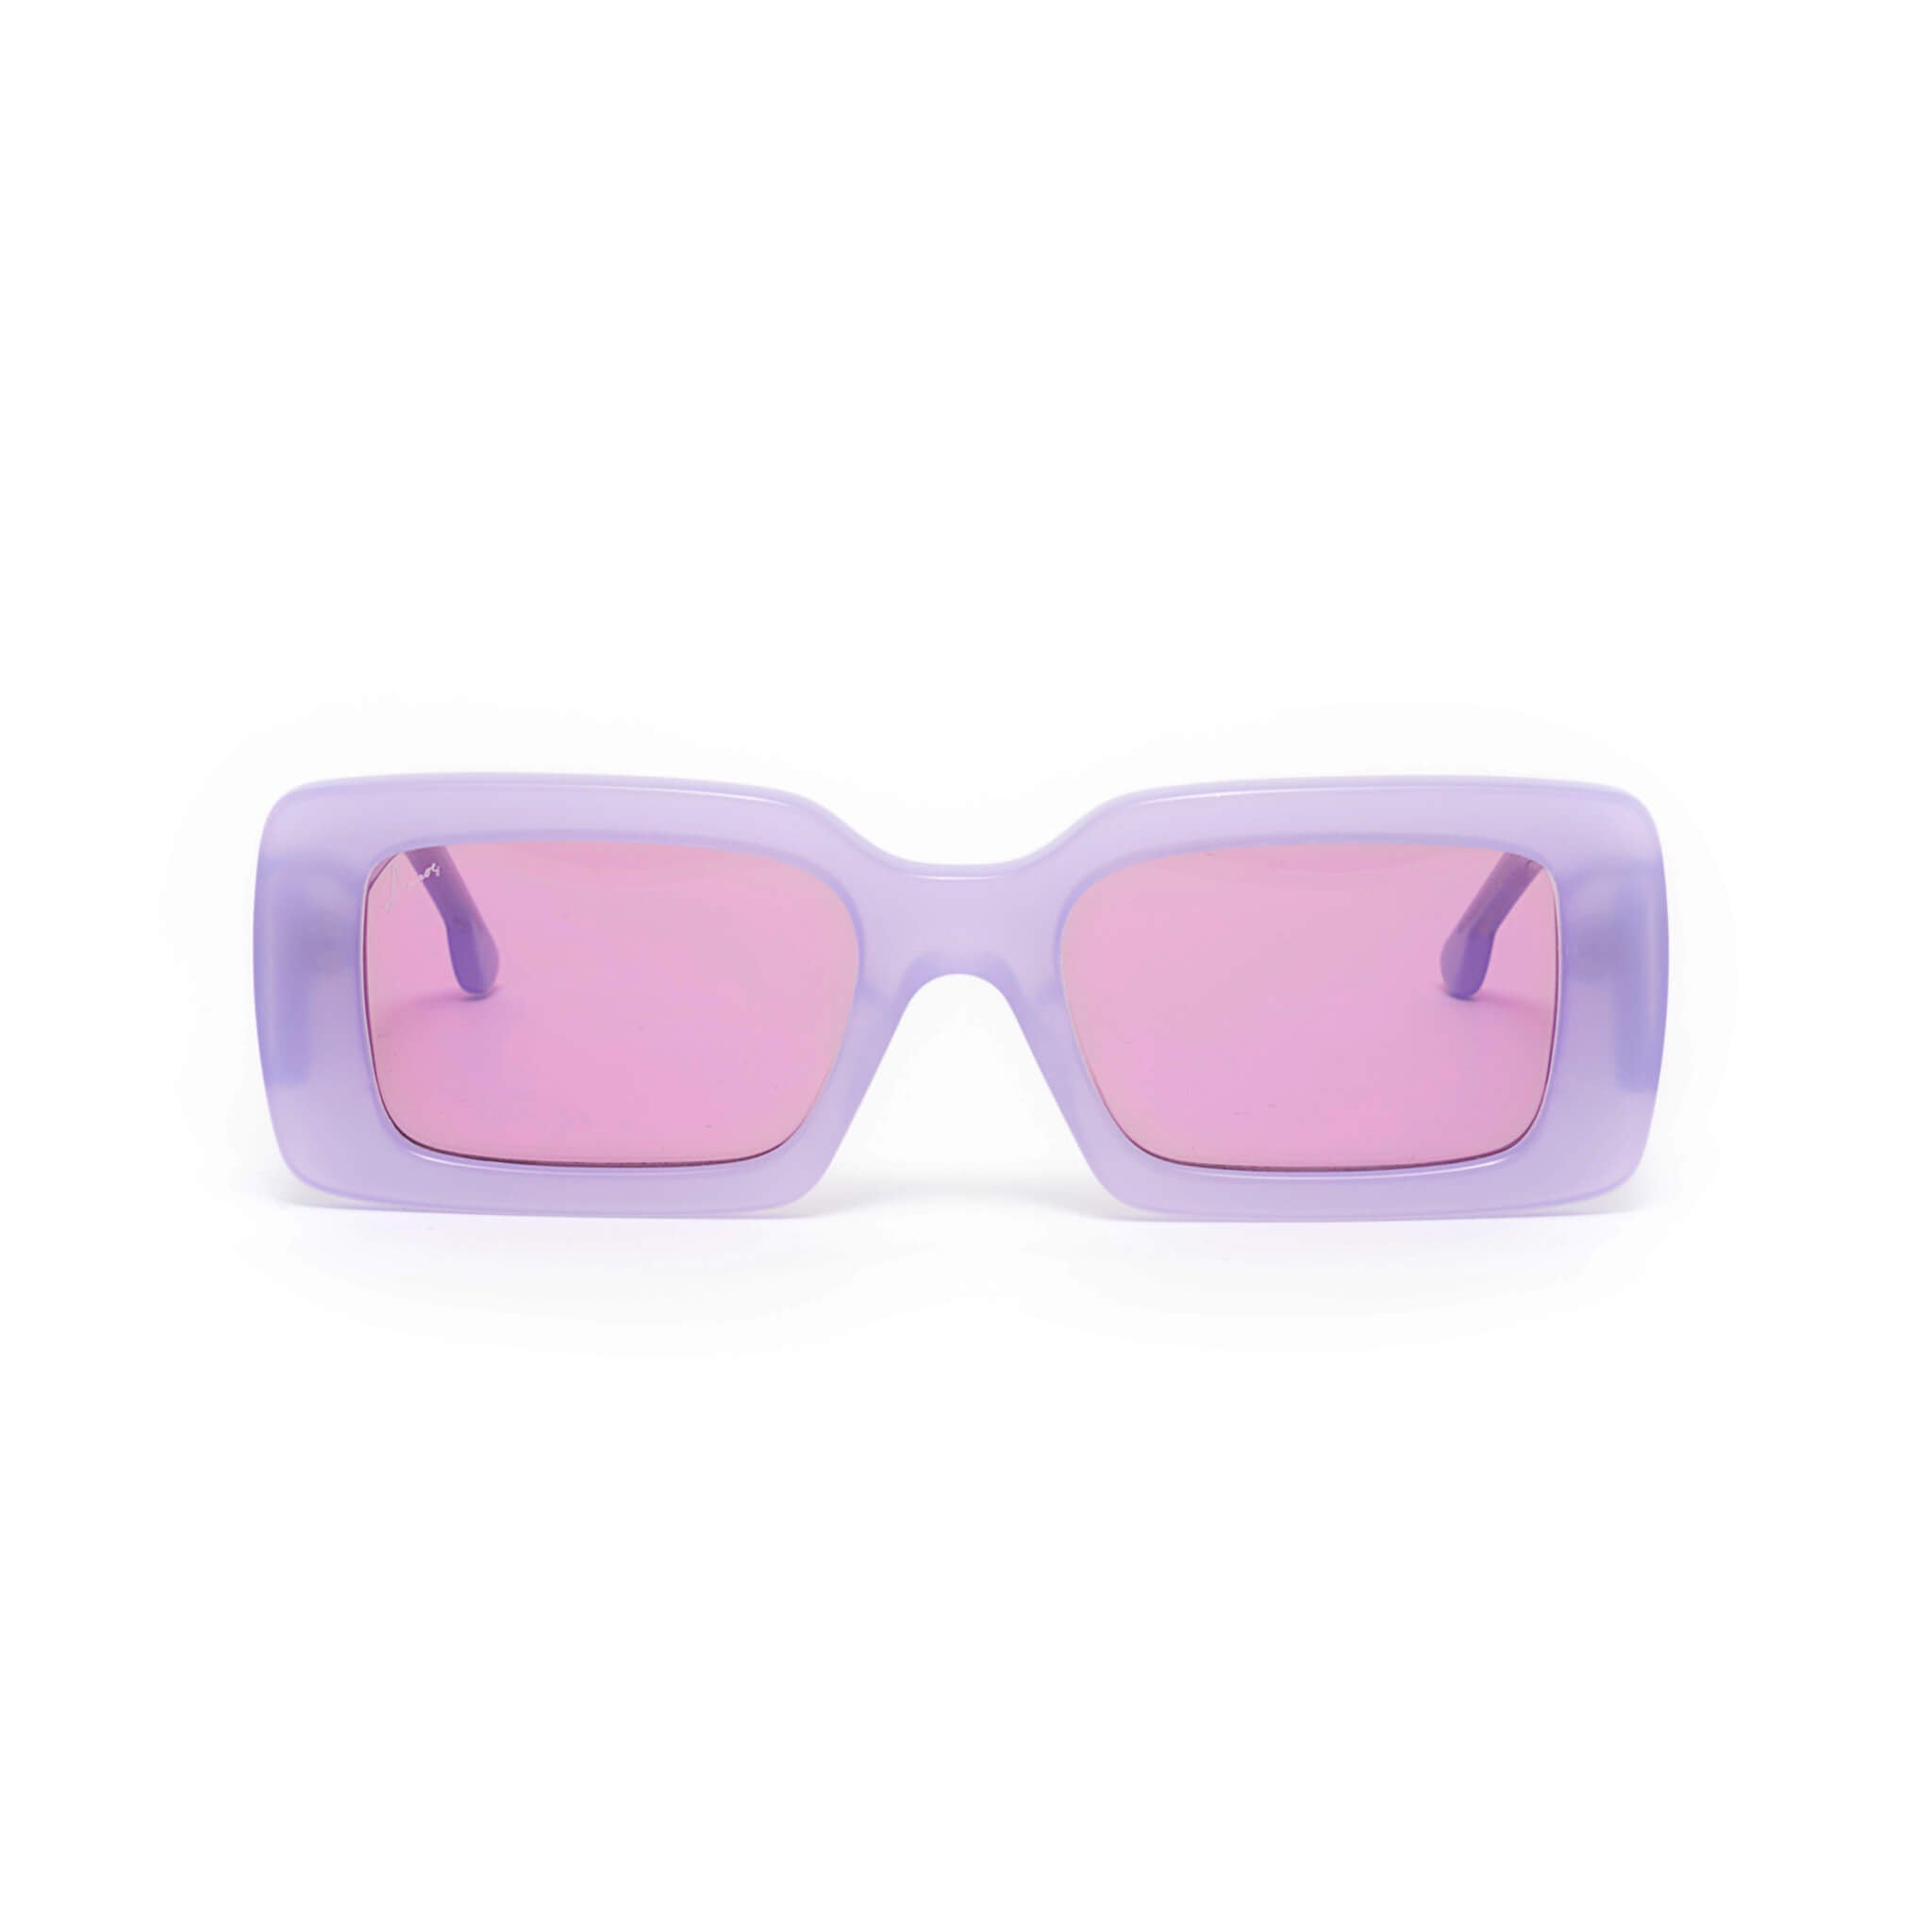 Purple rectangular sunglasses with purple lenses